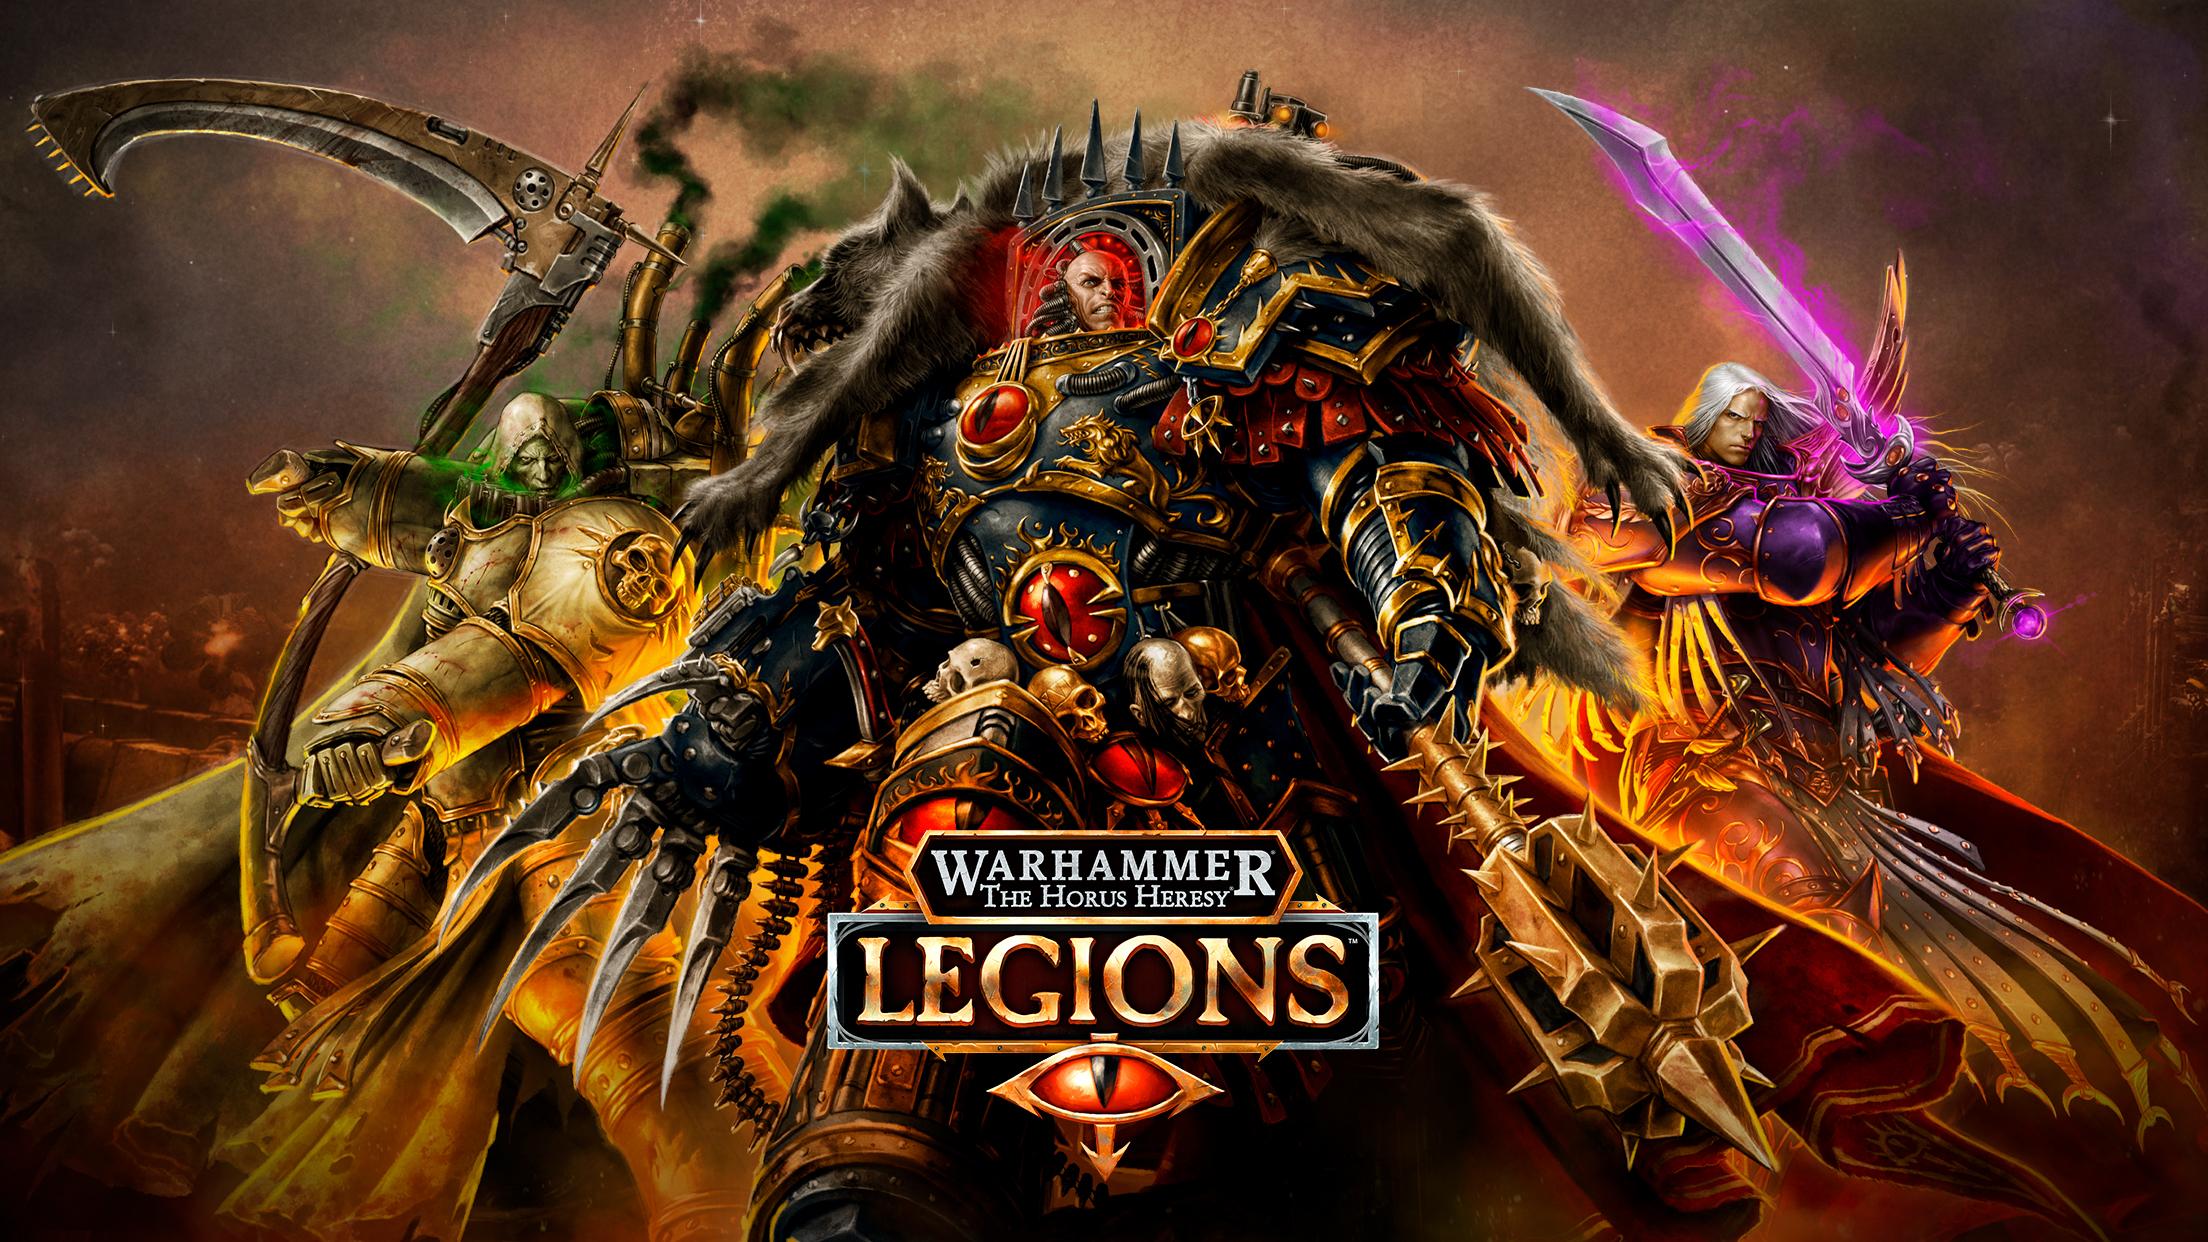 Warhammer horus heresy legions. Warhammer the Horus Heresy Legions. Хорус вархаммер. Warhammer 40k Horus Heresy Legions. The Horus Heresy: Legions TCG.